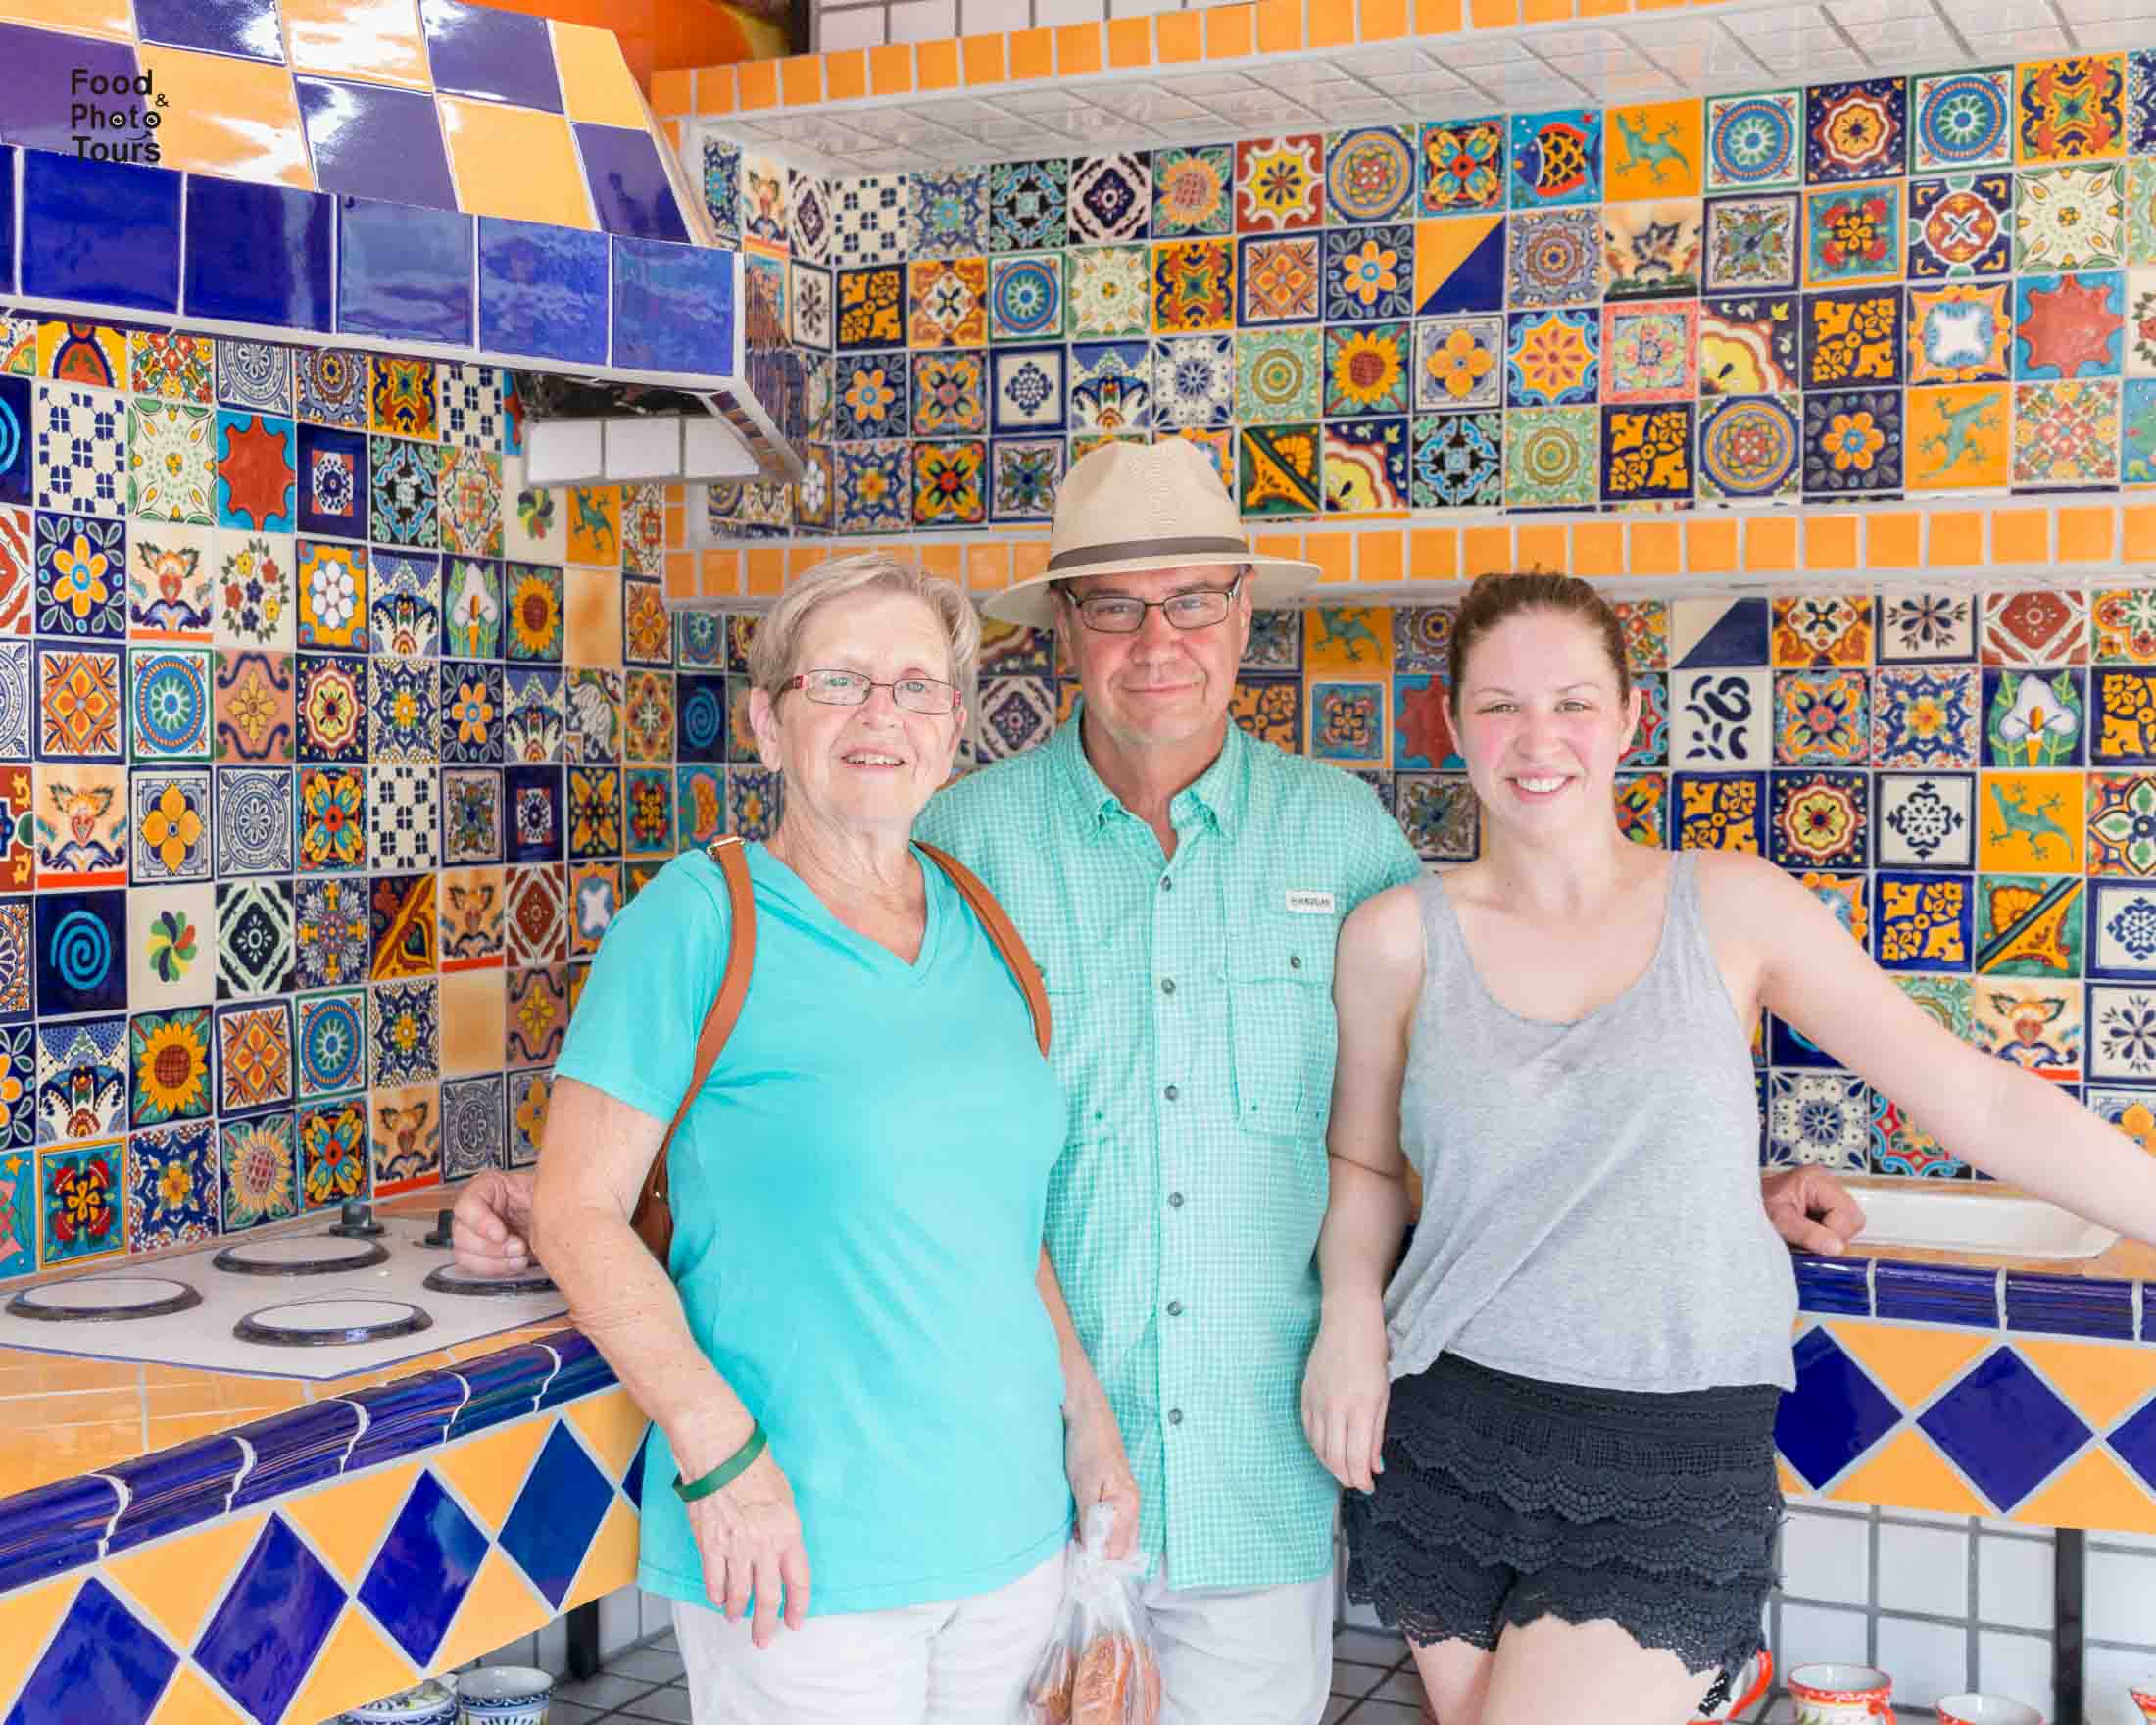 Food Tours and Destination Photographers in Puerto Vallarta